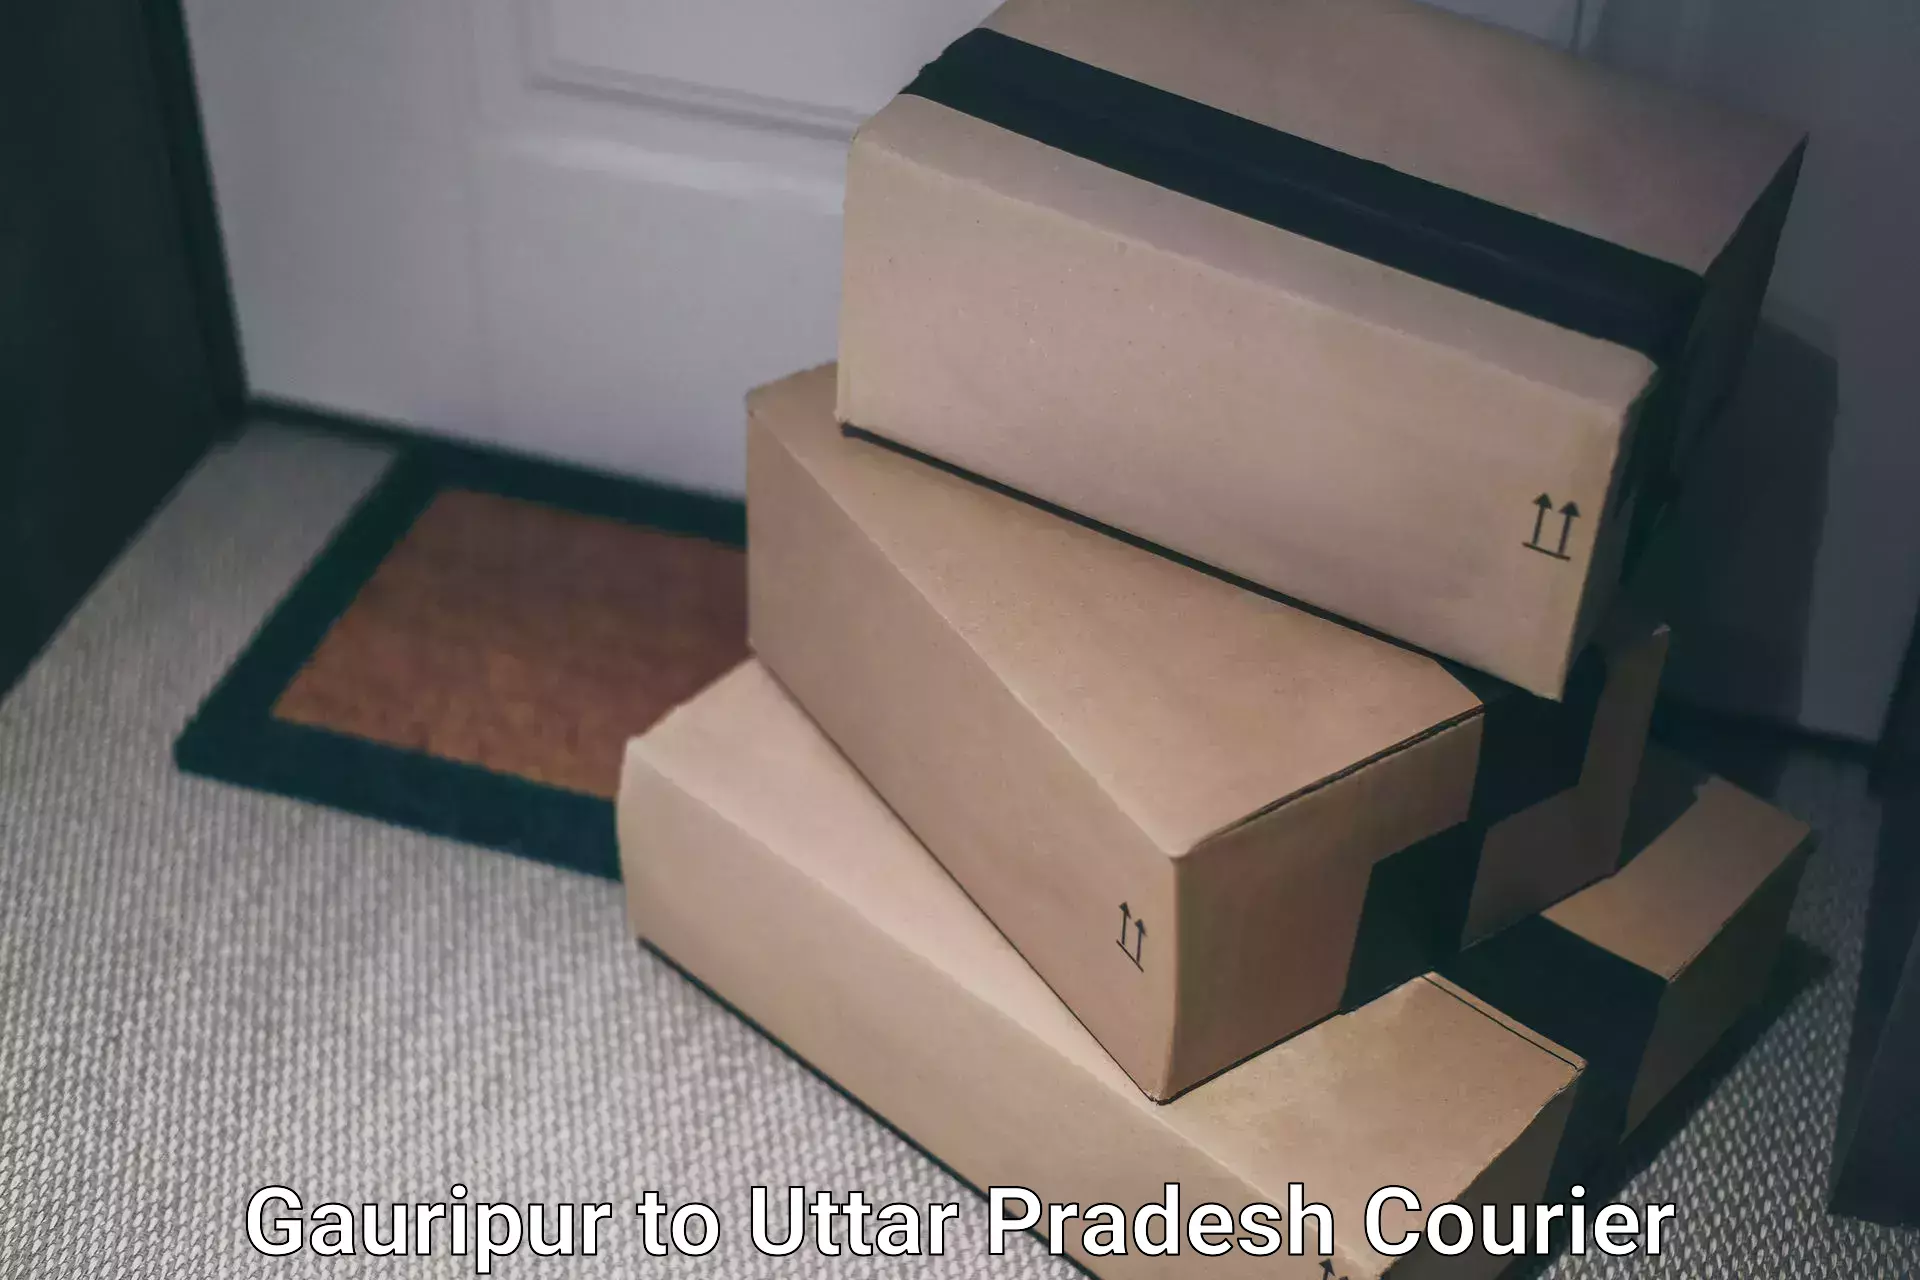 Courier service partnerships Gauripur to Uttar Pradesh